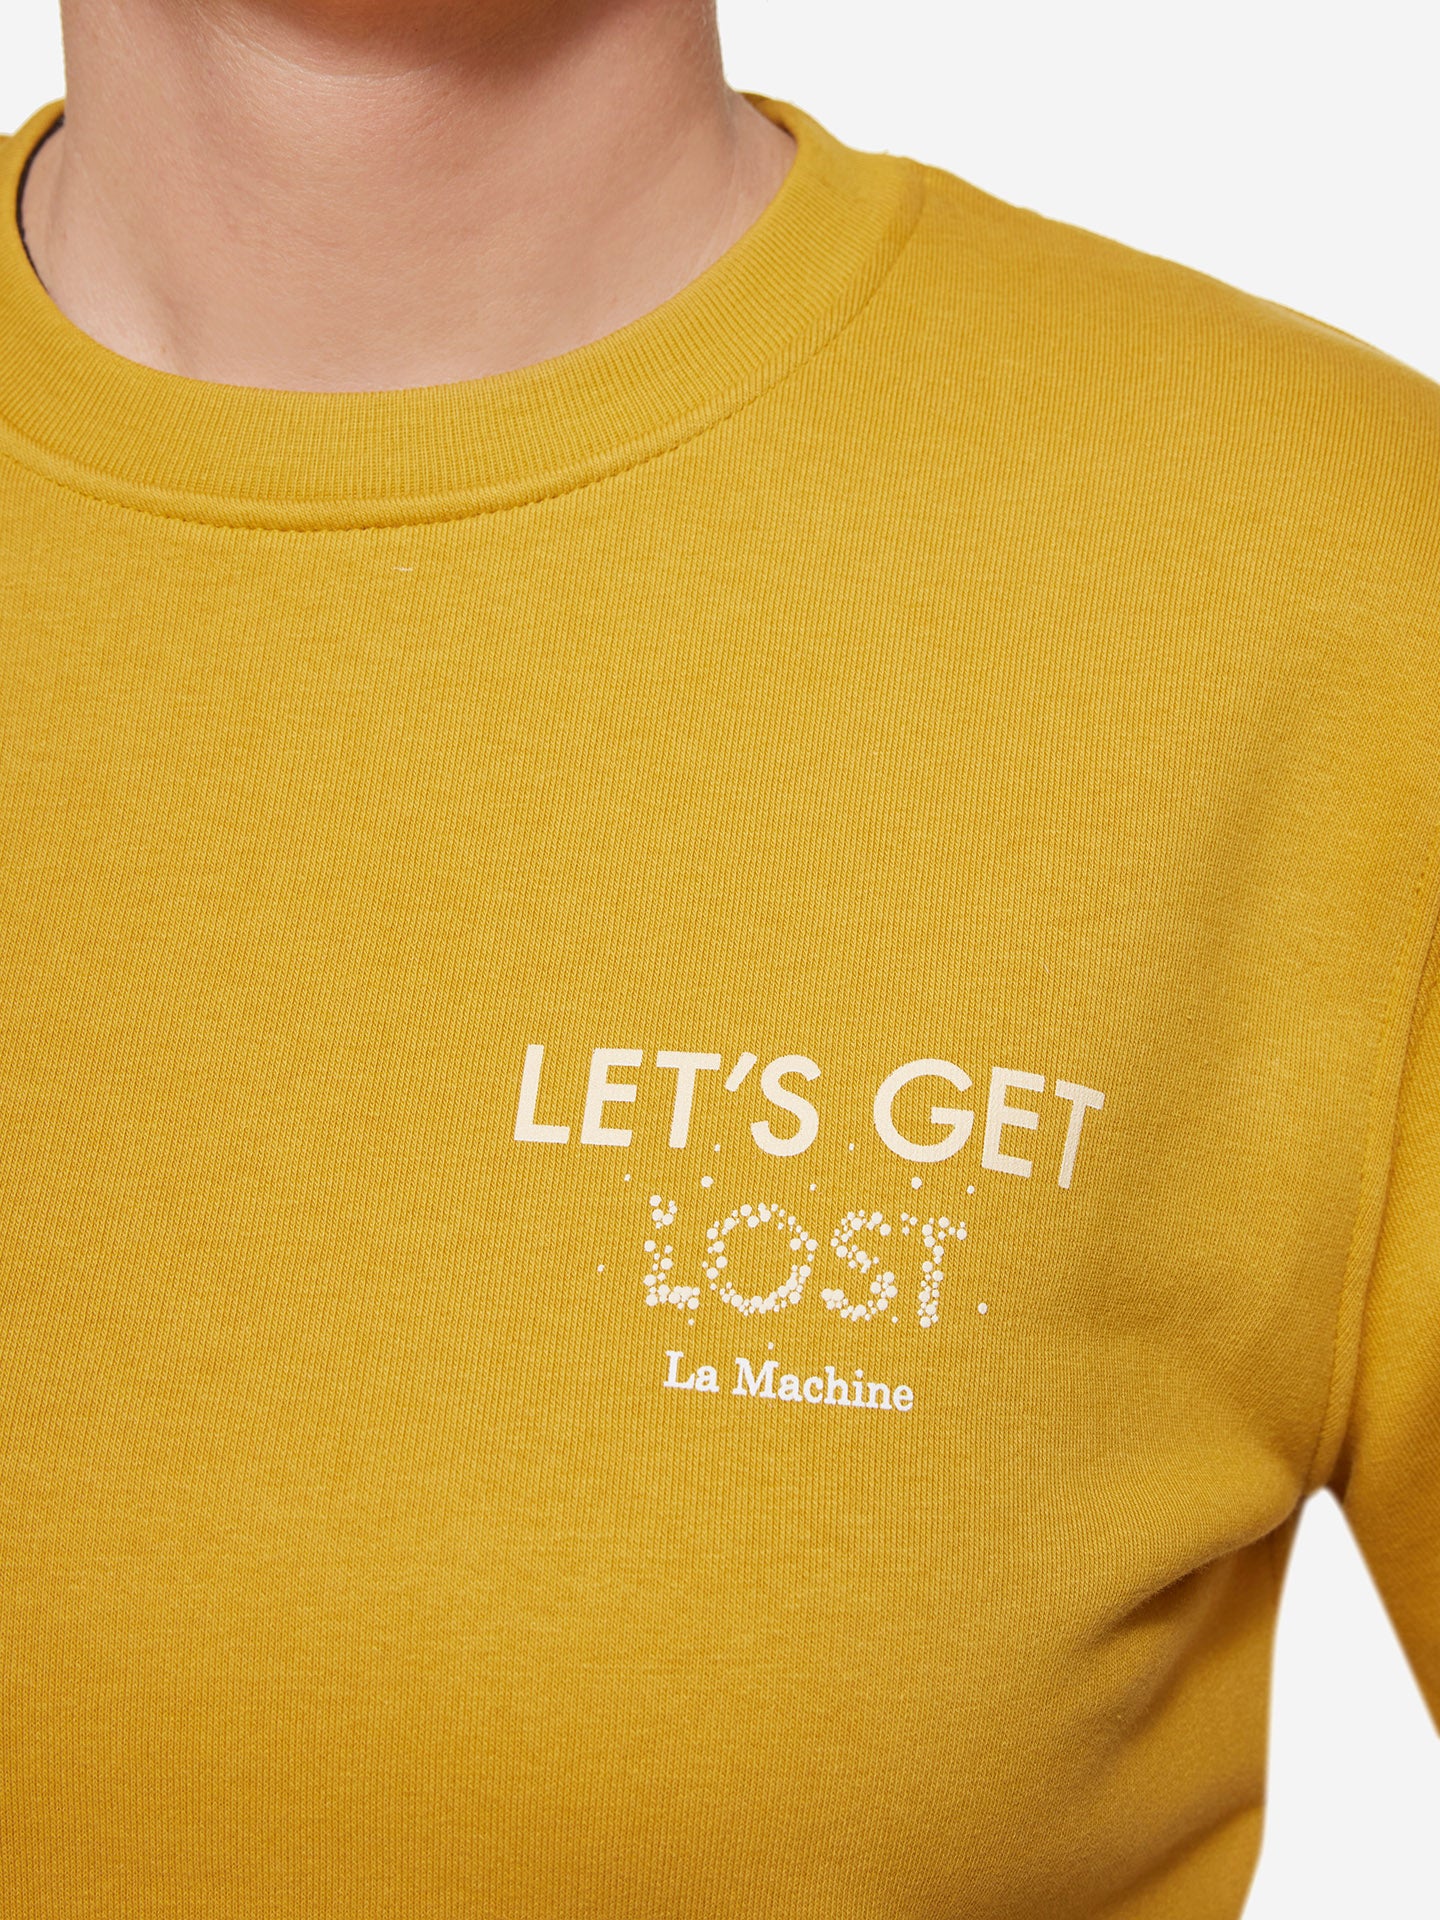 Let's get lost women's sweatshirt - La Machine Cycle Club